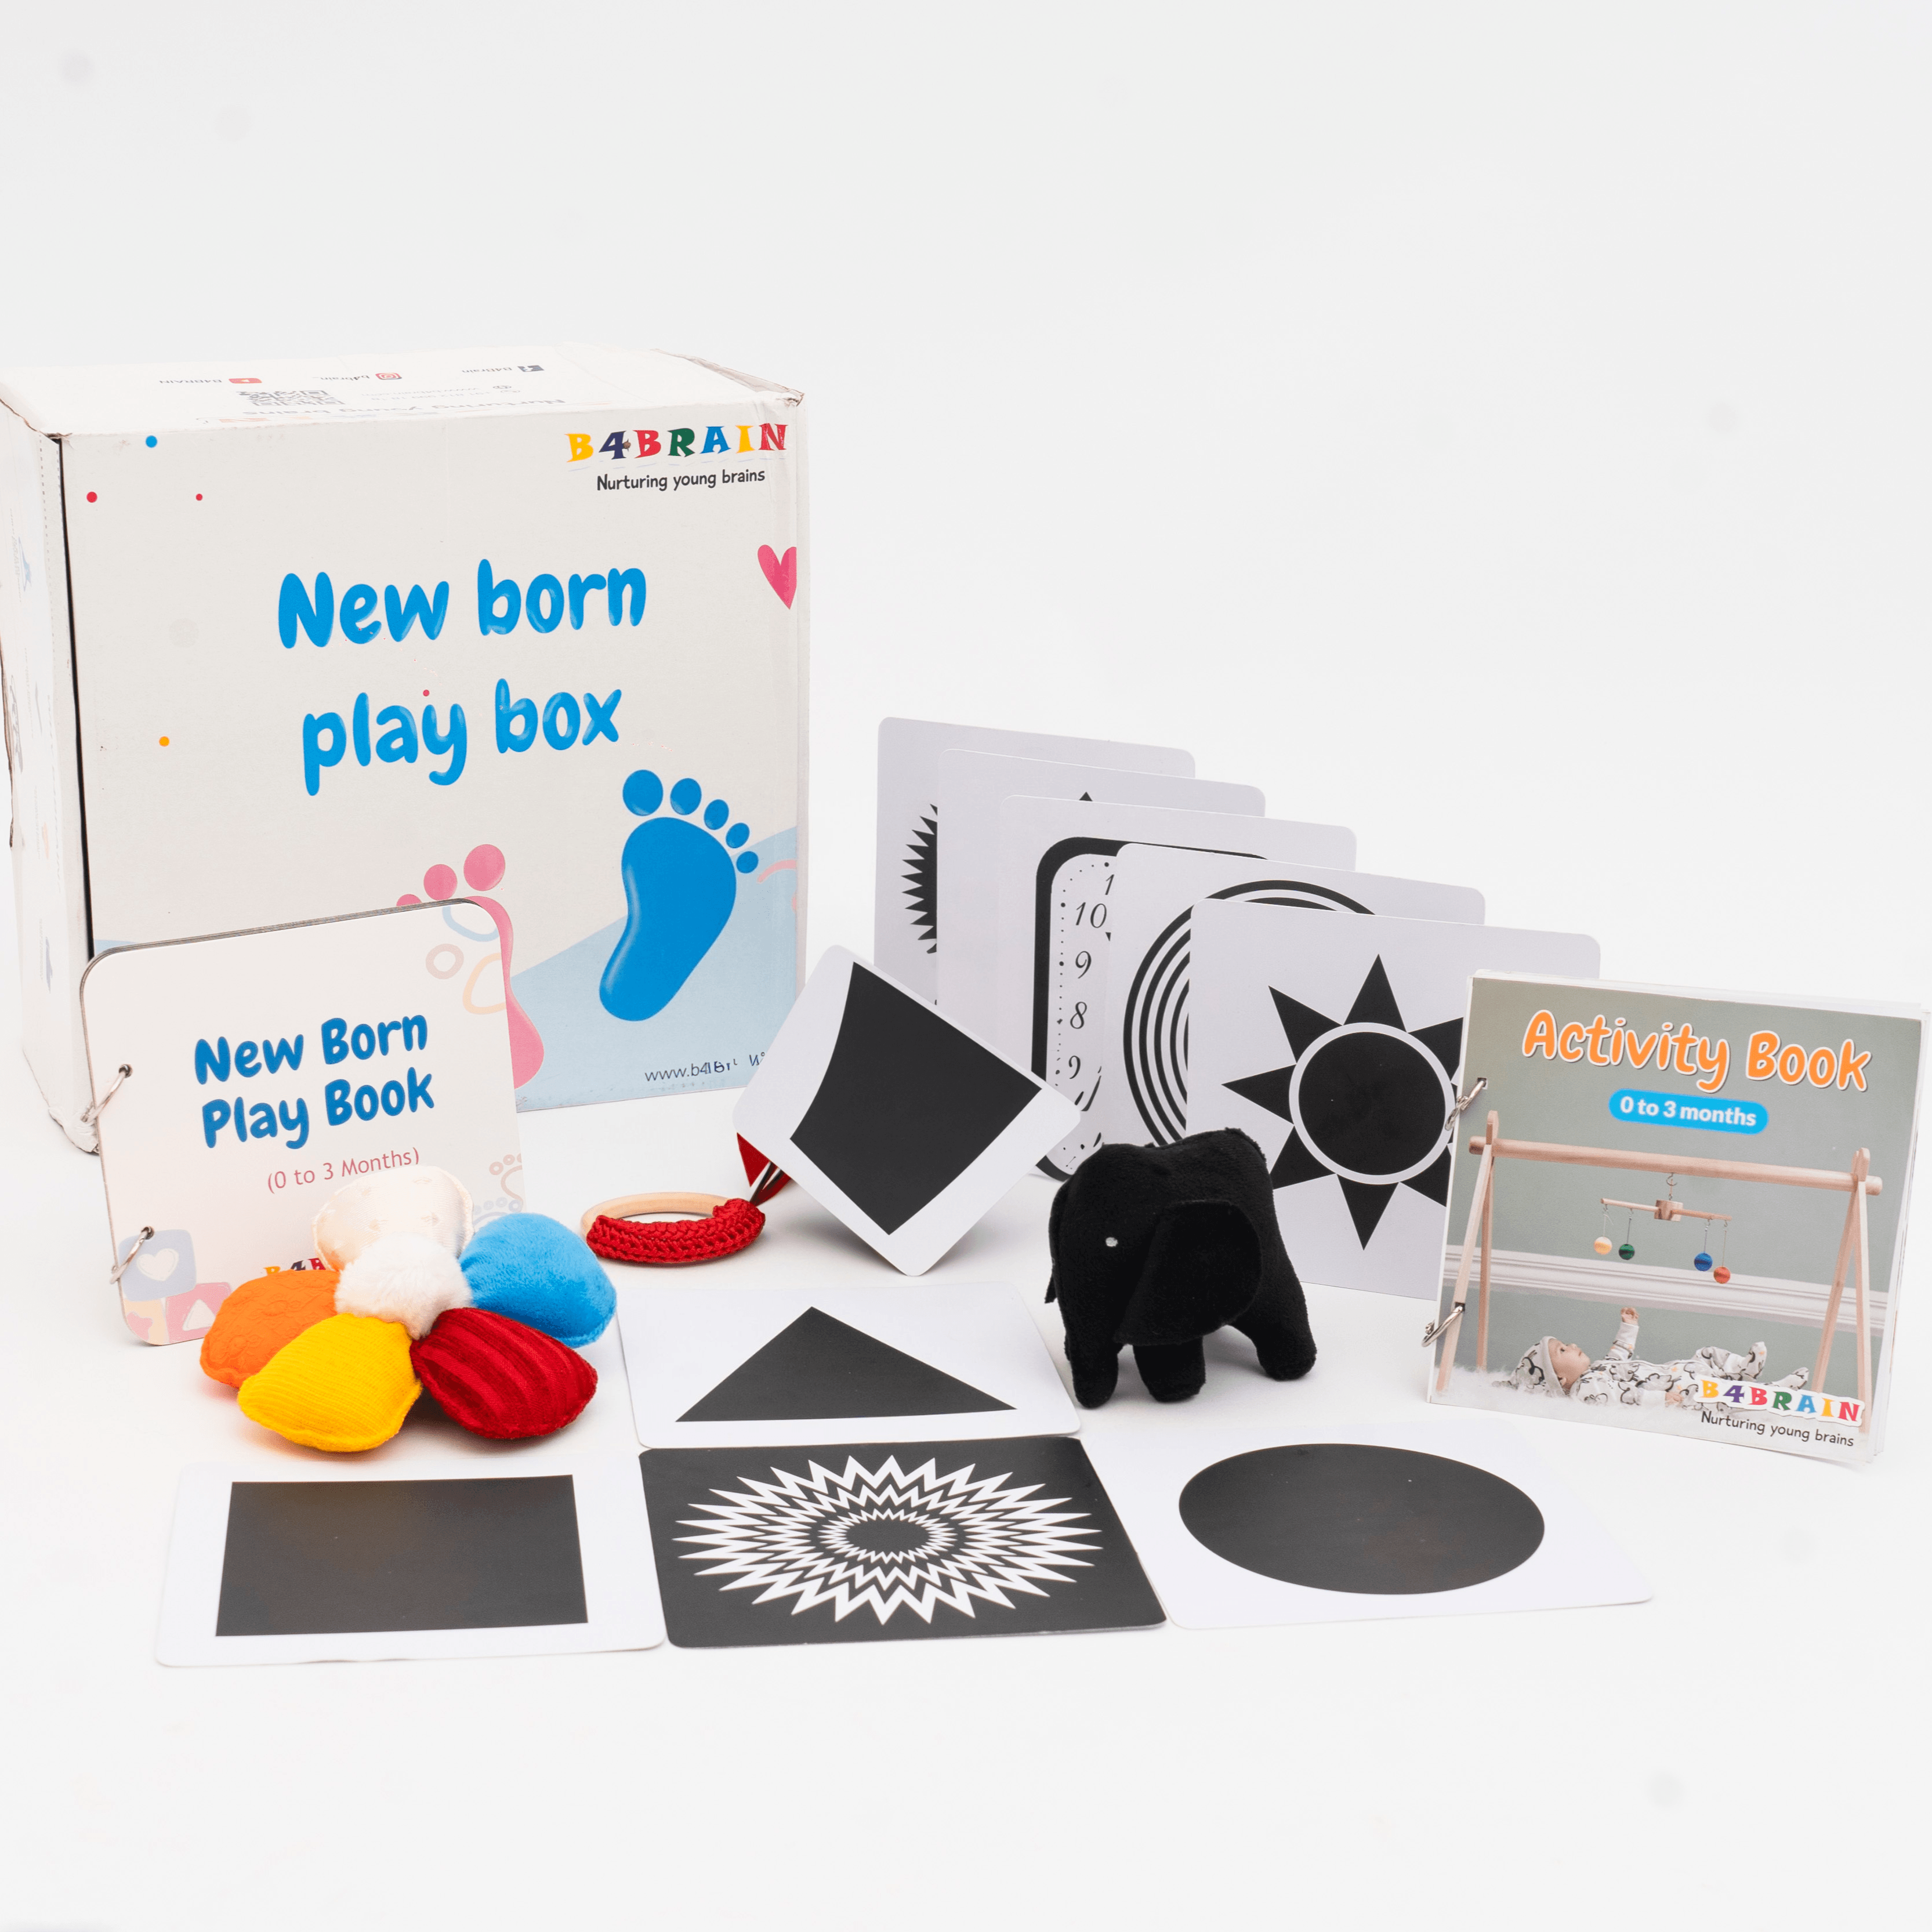 NewBorn PlayBox 0-3 Months (Basic) Babies - B4brain